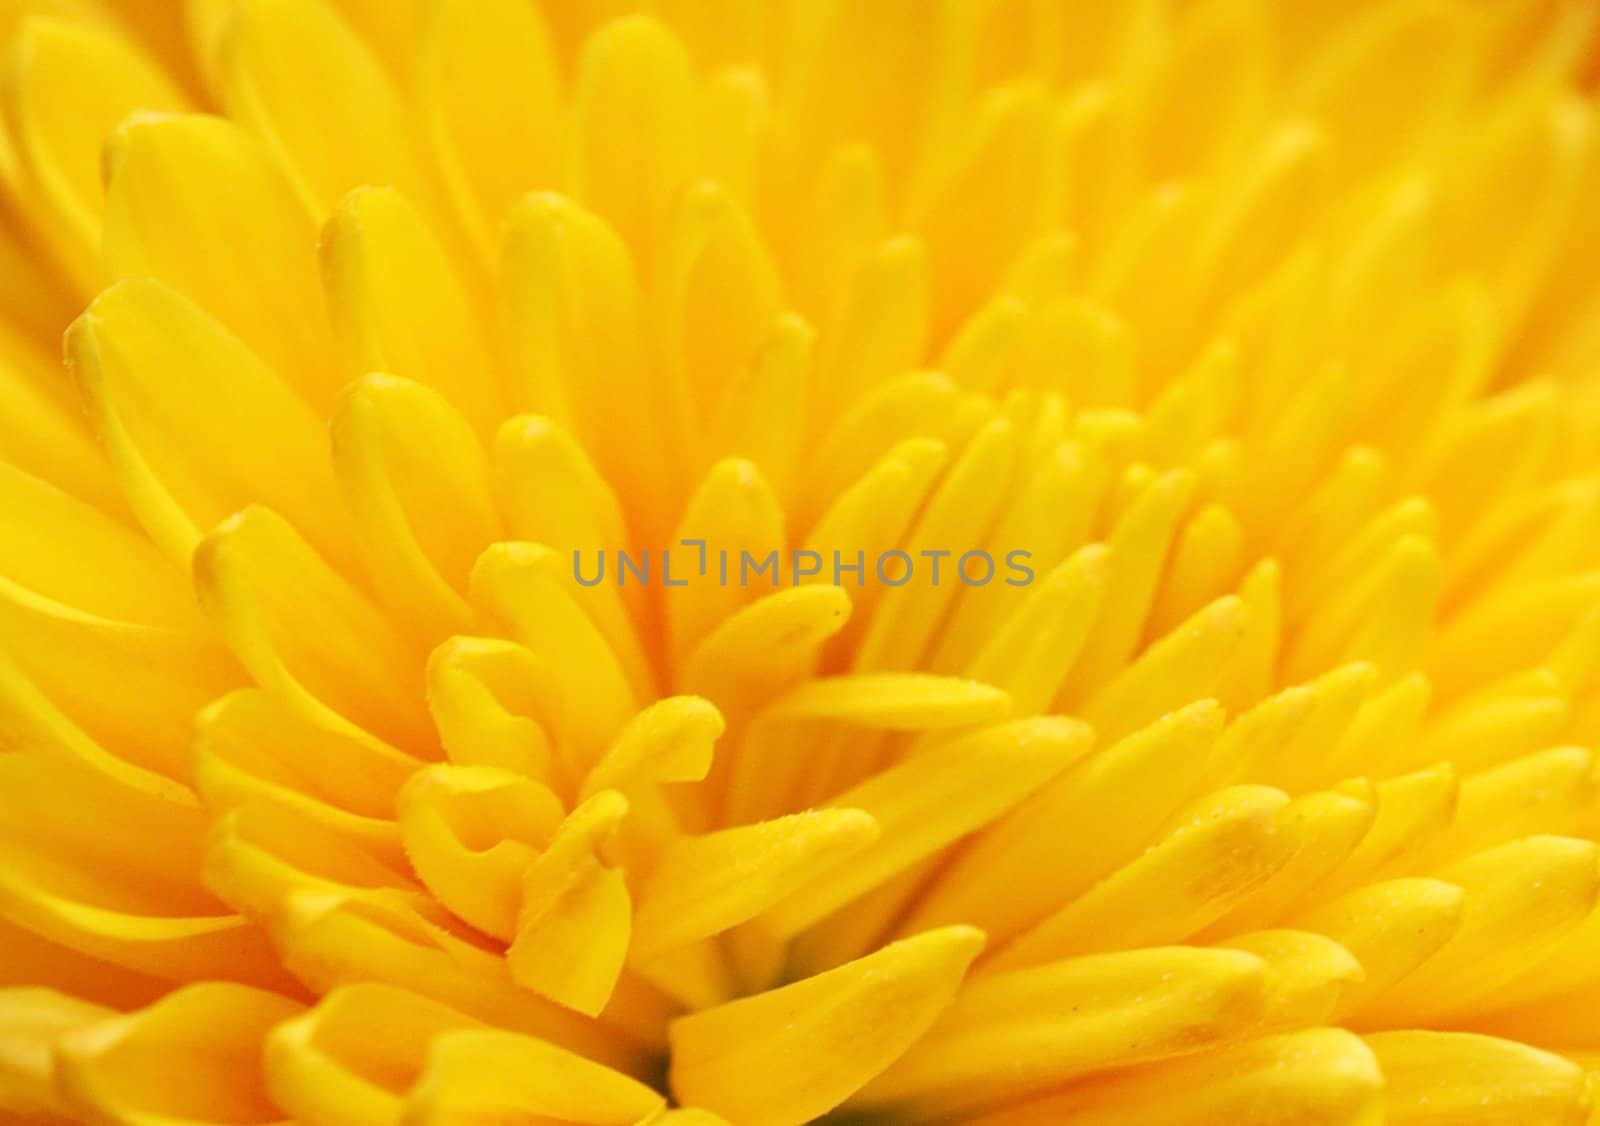 close up of yellow chrysanthemum